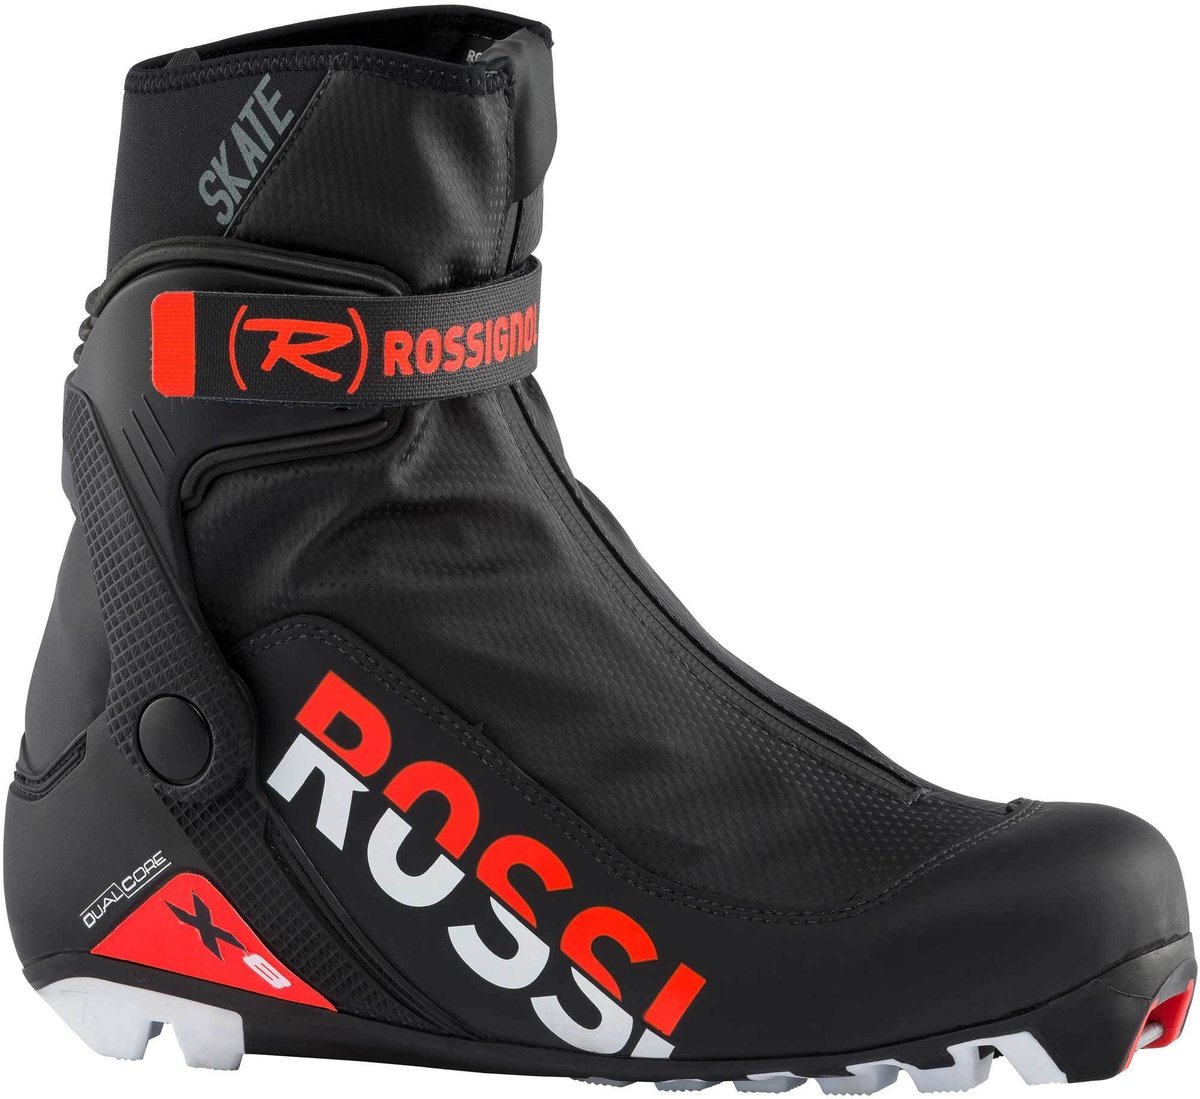 Rossignol Men's Race Skating Nordic Boots X-8 - Continental Ski